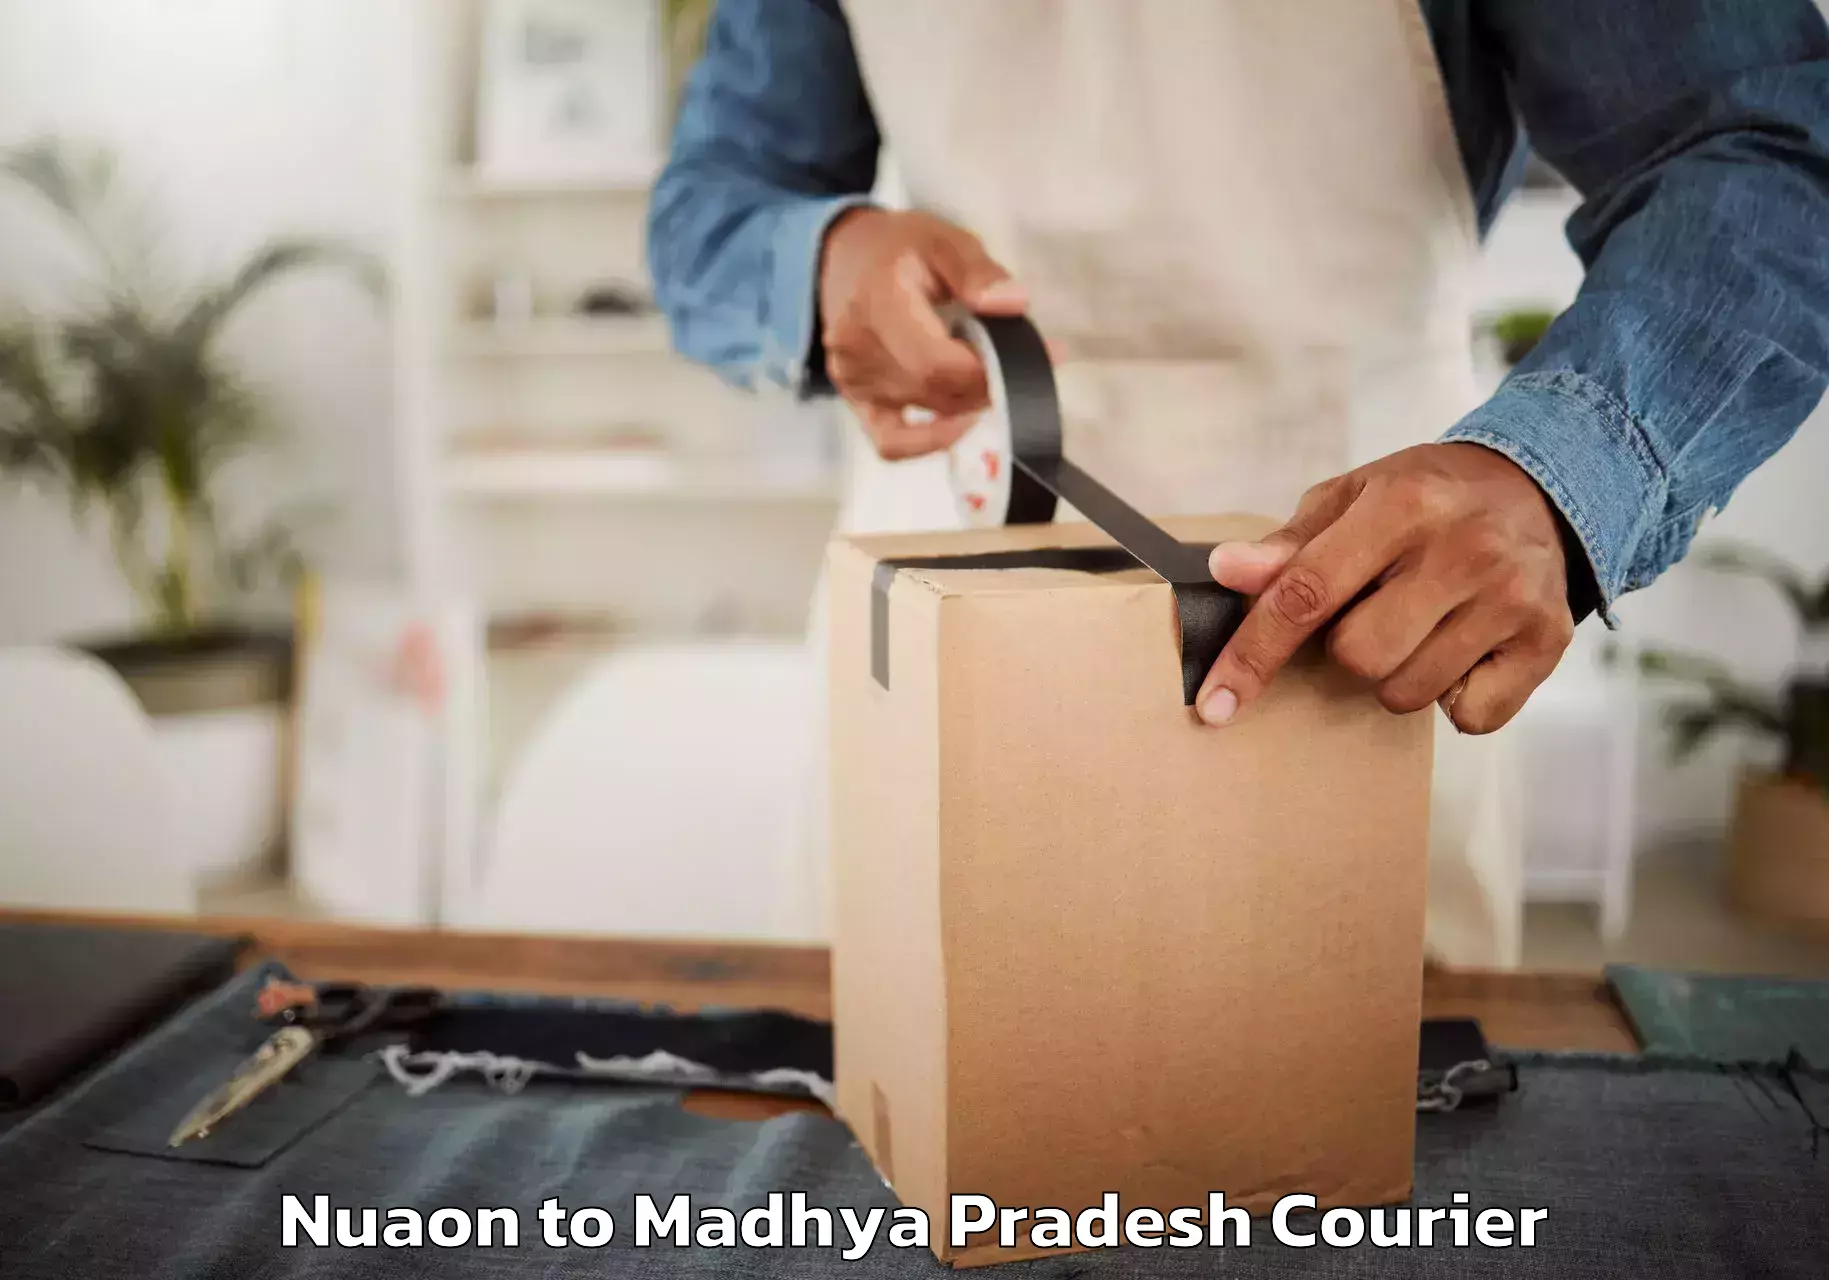 Furniture delivery service Nuaon to Madhya Pradesh